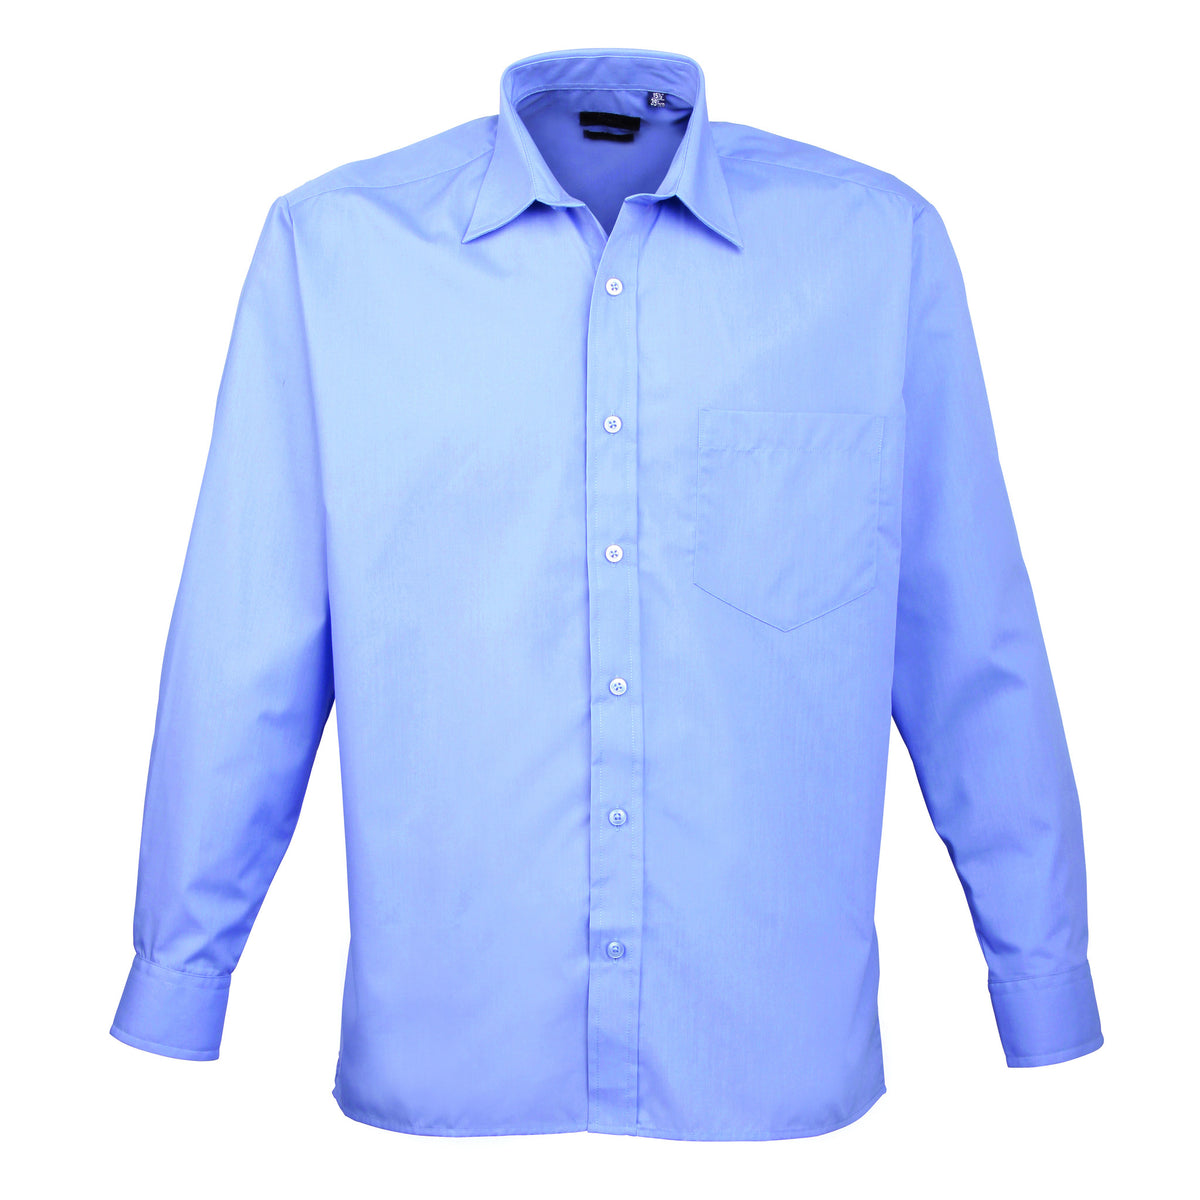 Premier Poplin Shirts (Sapphire, Turquoise, Light Blue, Mid Blue, Royal) - peterdrew.com
 - 5